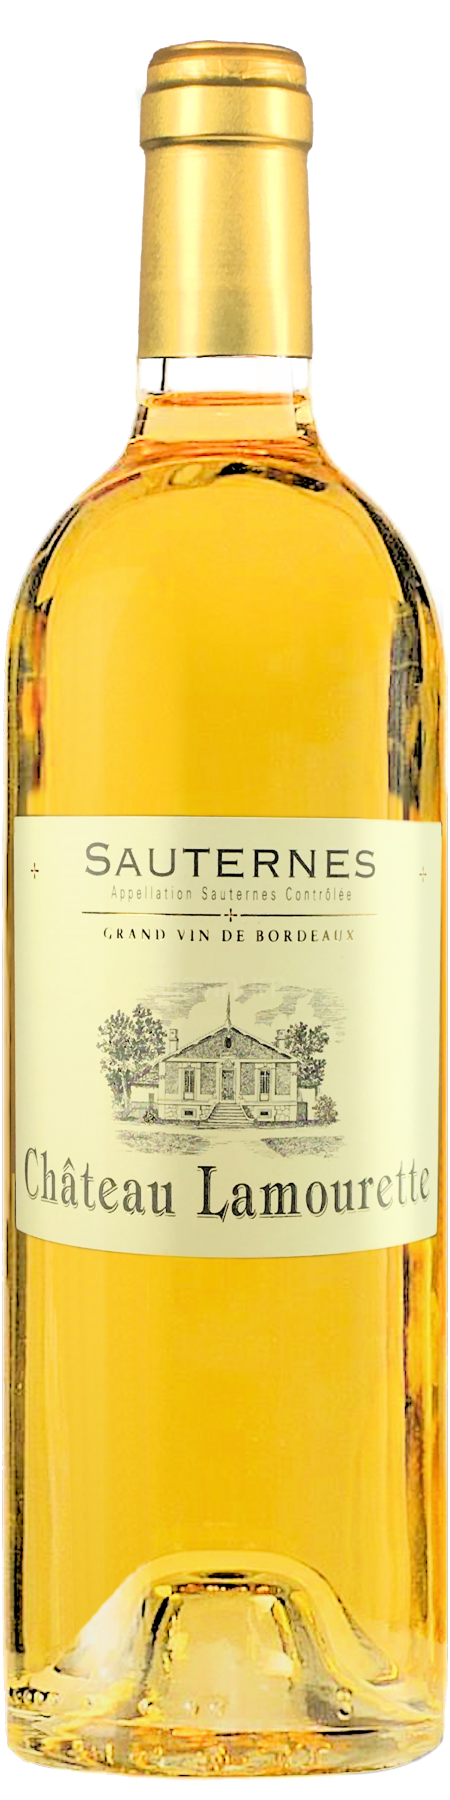 Château Lamourette Sauternes 2015 - 375 ml